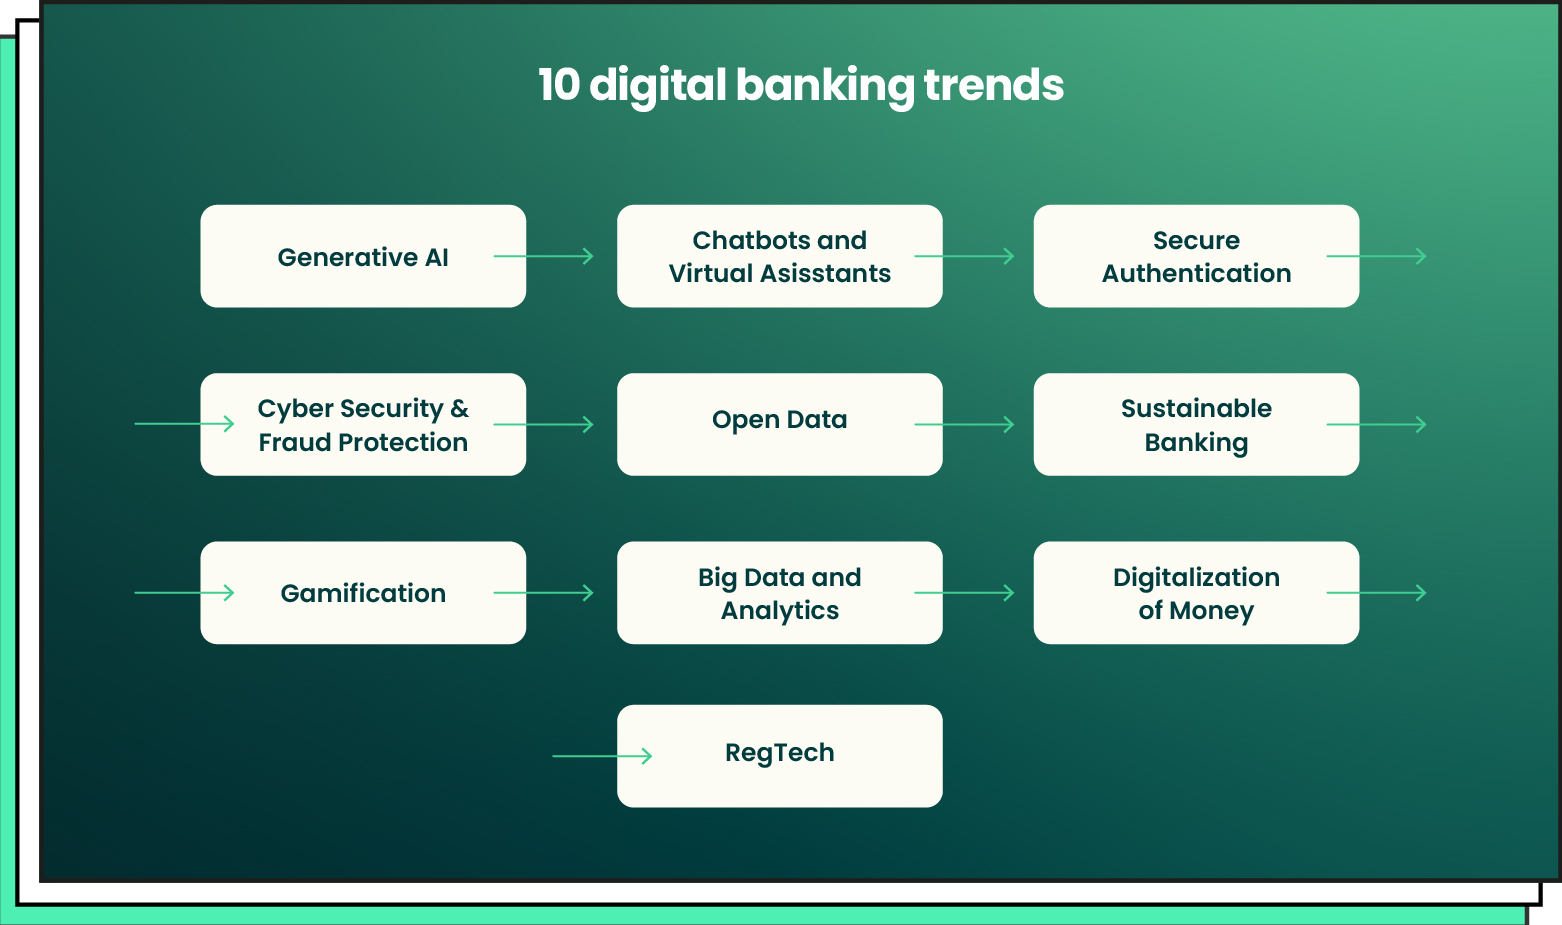 10 Top Digital Banking Trends